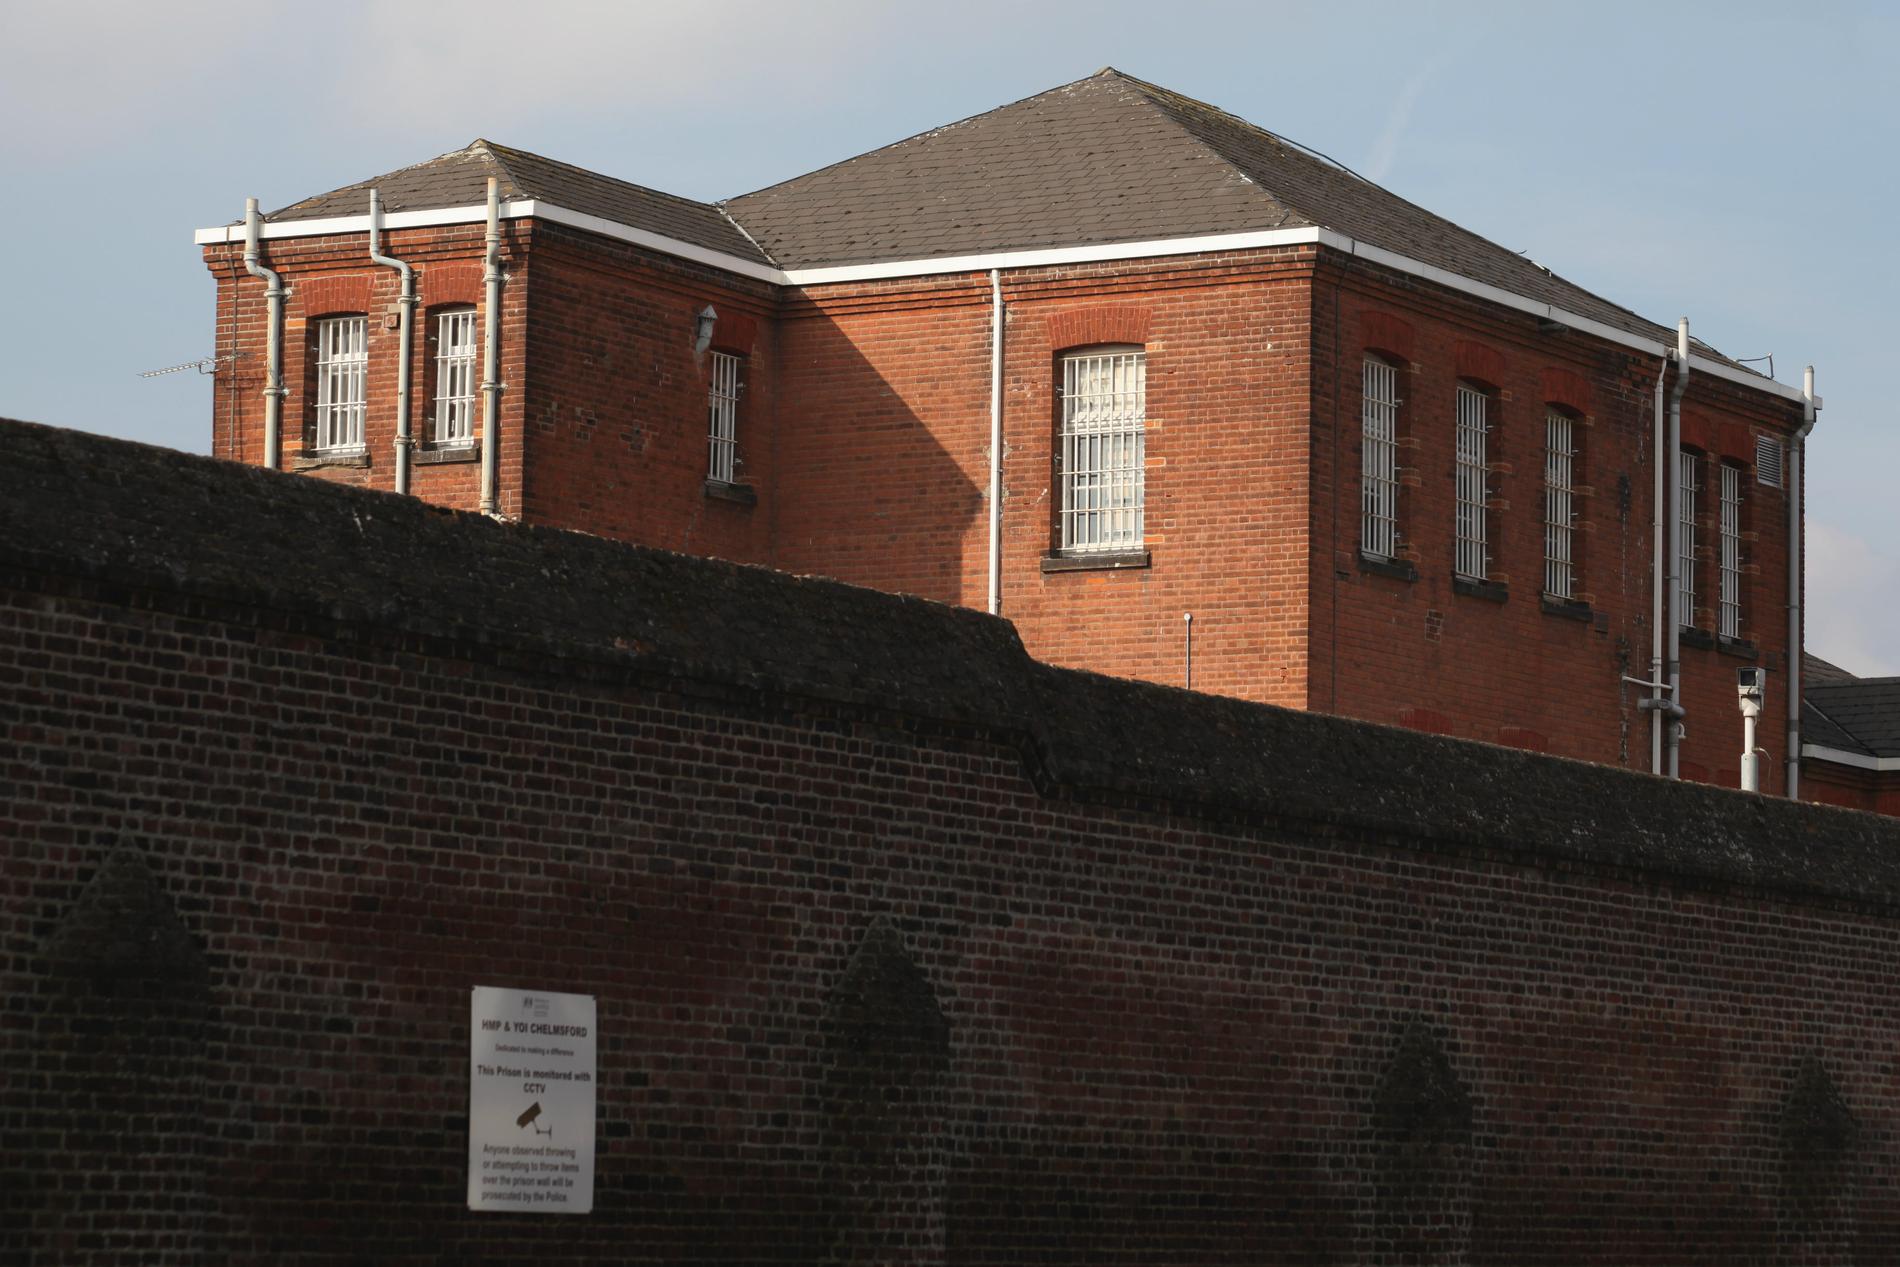 Chelmsford Prison.